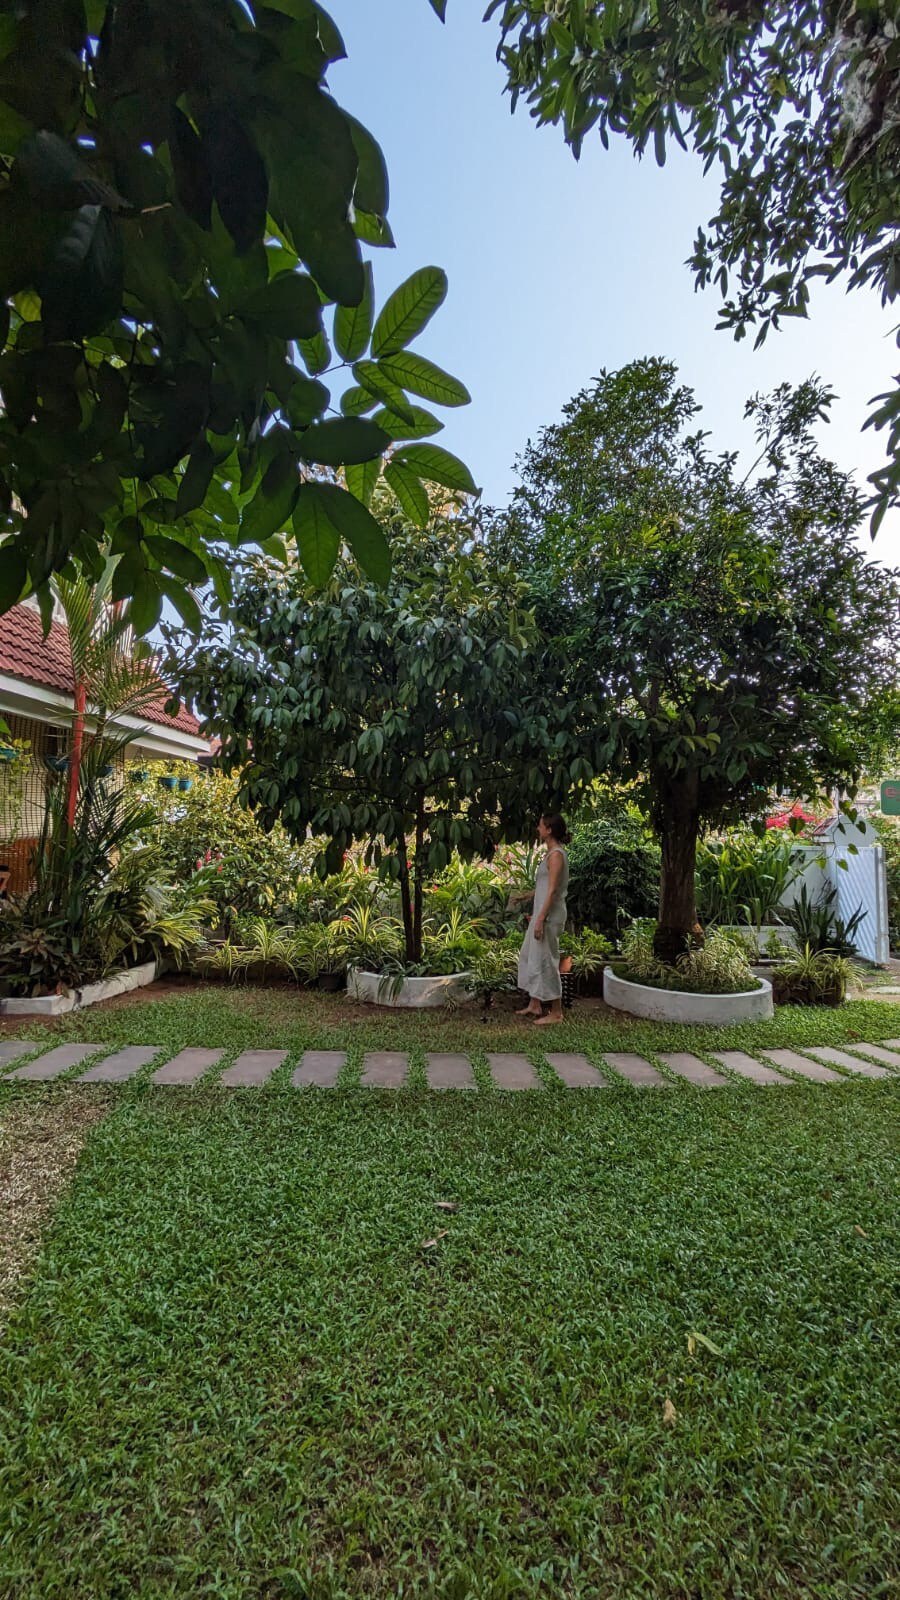 Garden Oasis in Kochi